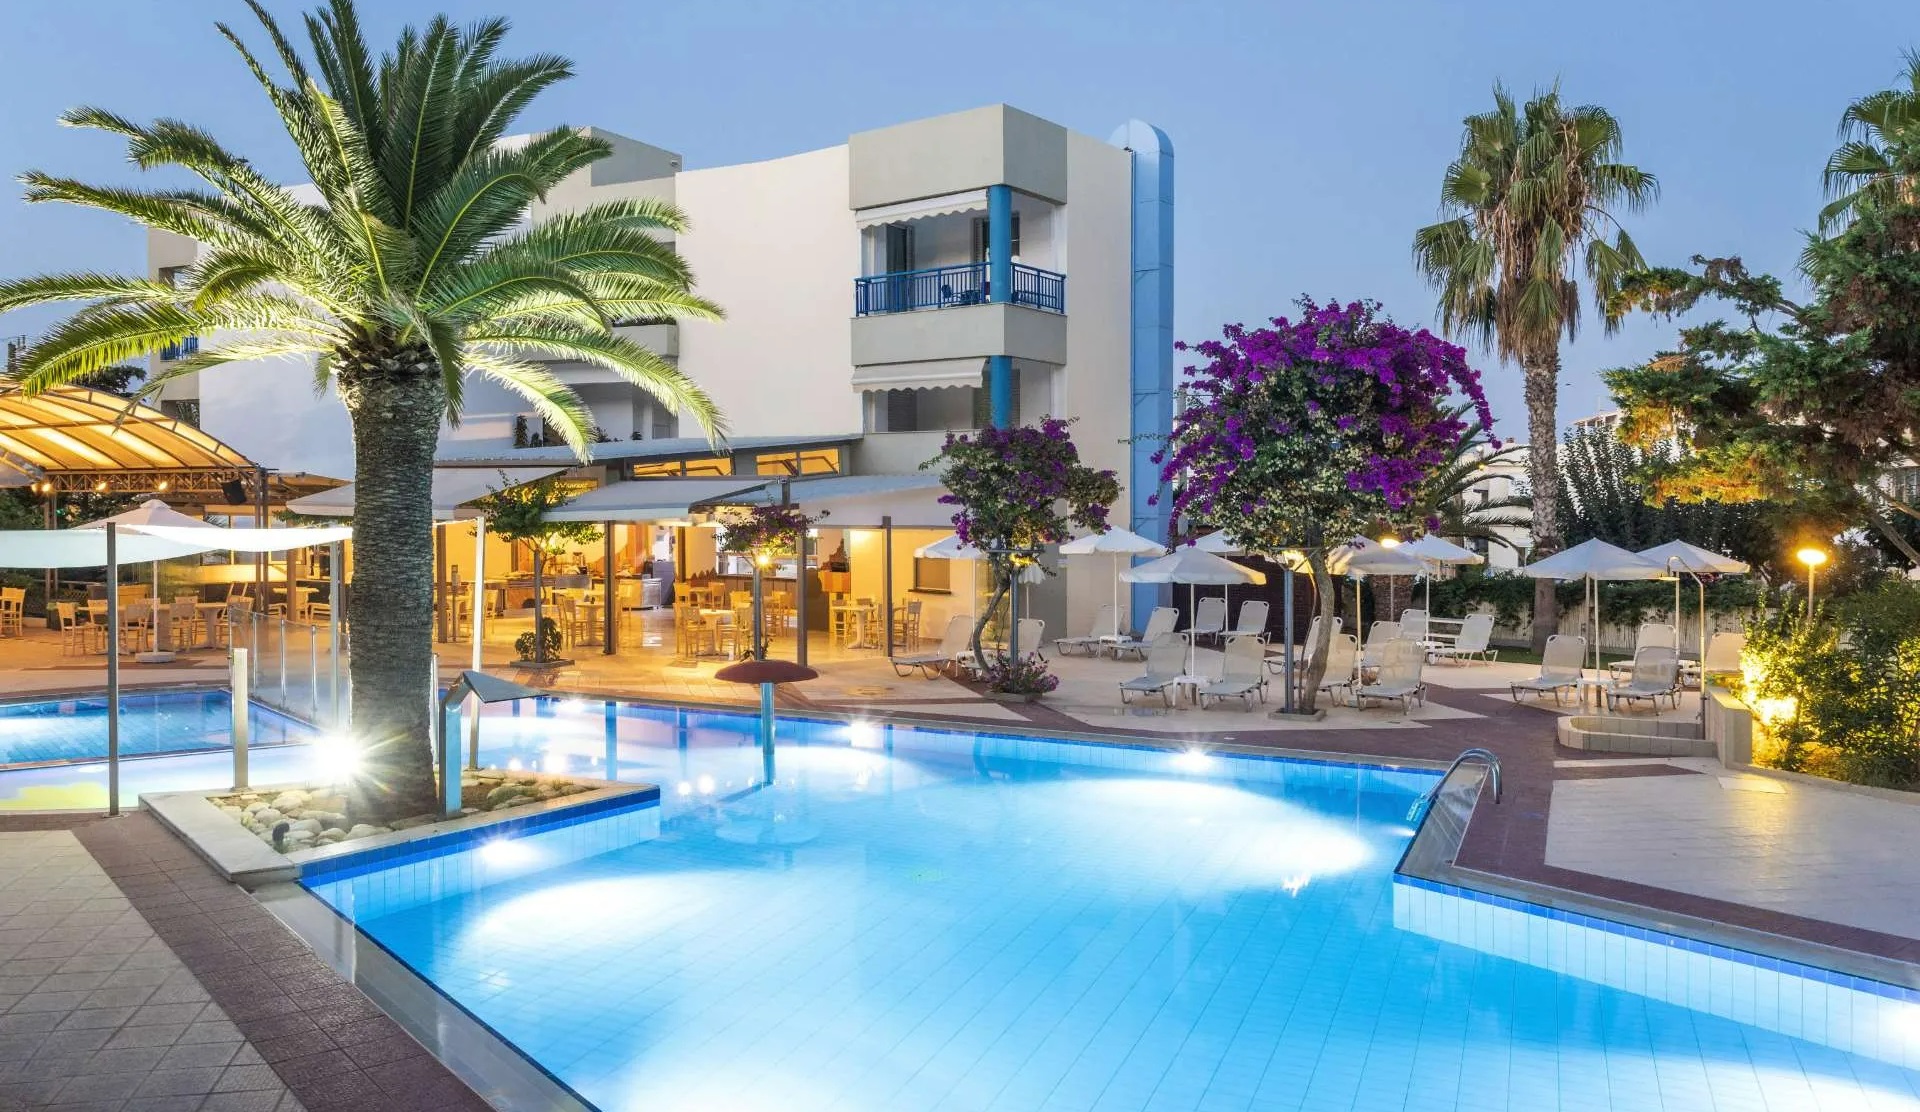 Ibiscos Garden Hotel - Ρέθυμνο, Κρήτη ✦ 2 Ημέρες (1